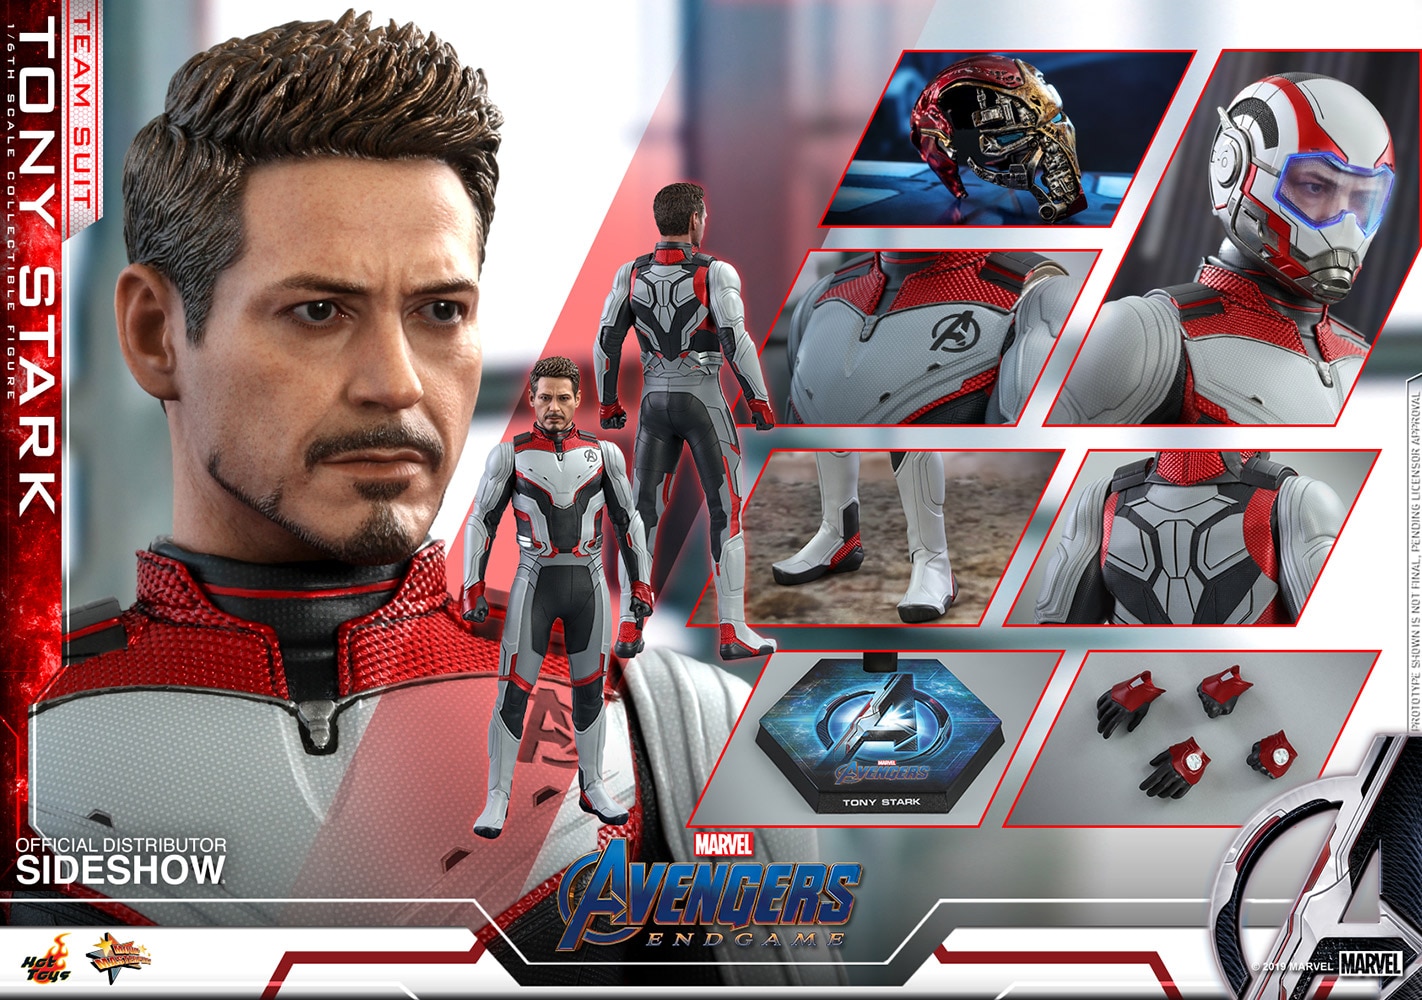 Figurine Funko Pop! Marvel: Avengers Game - Iron Man (Stark Tech Suit) - La  Poste